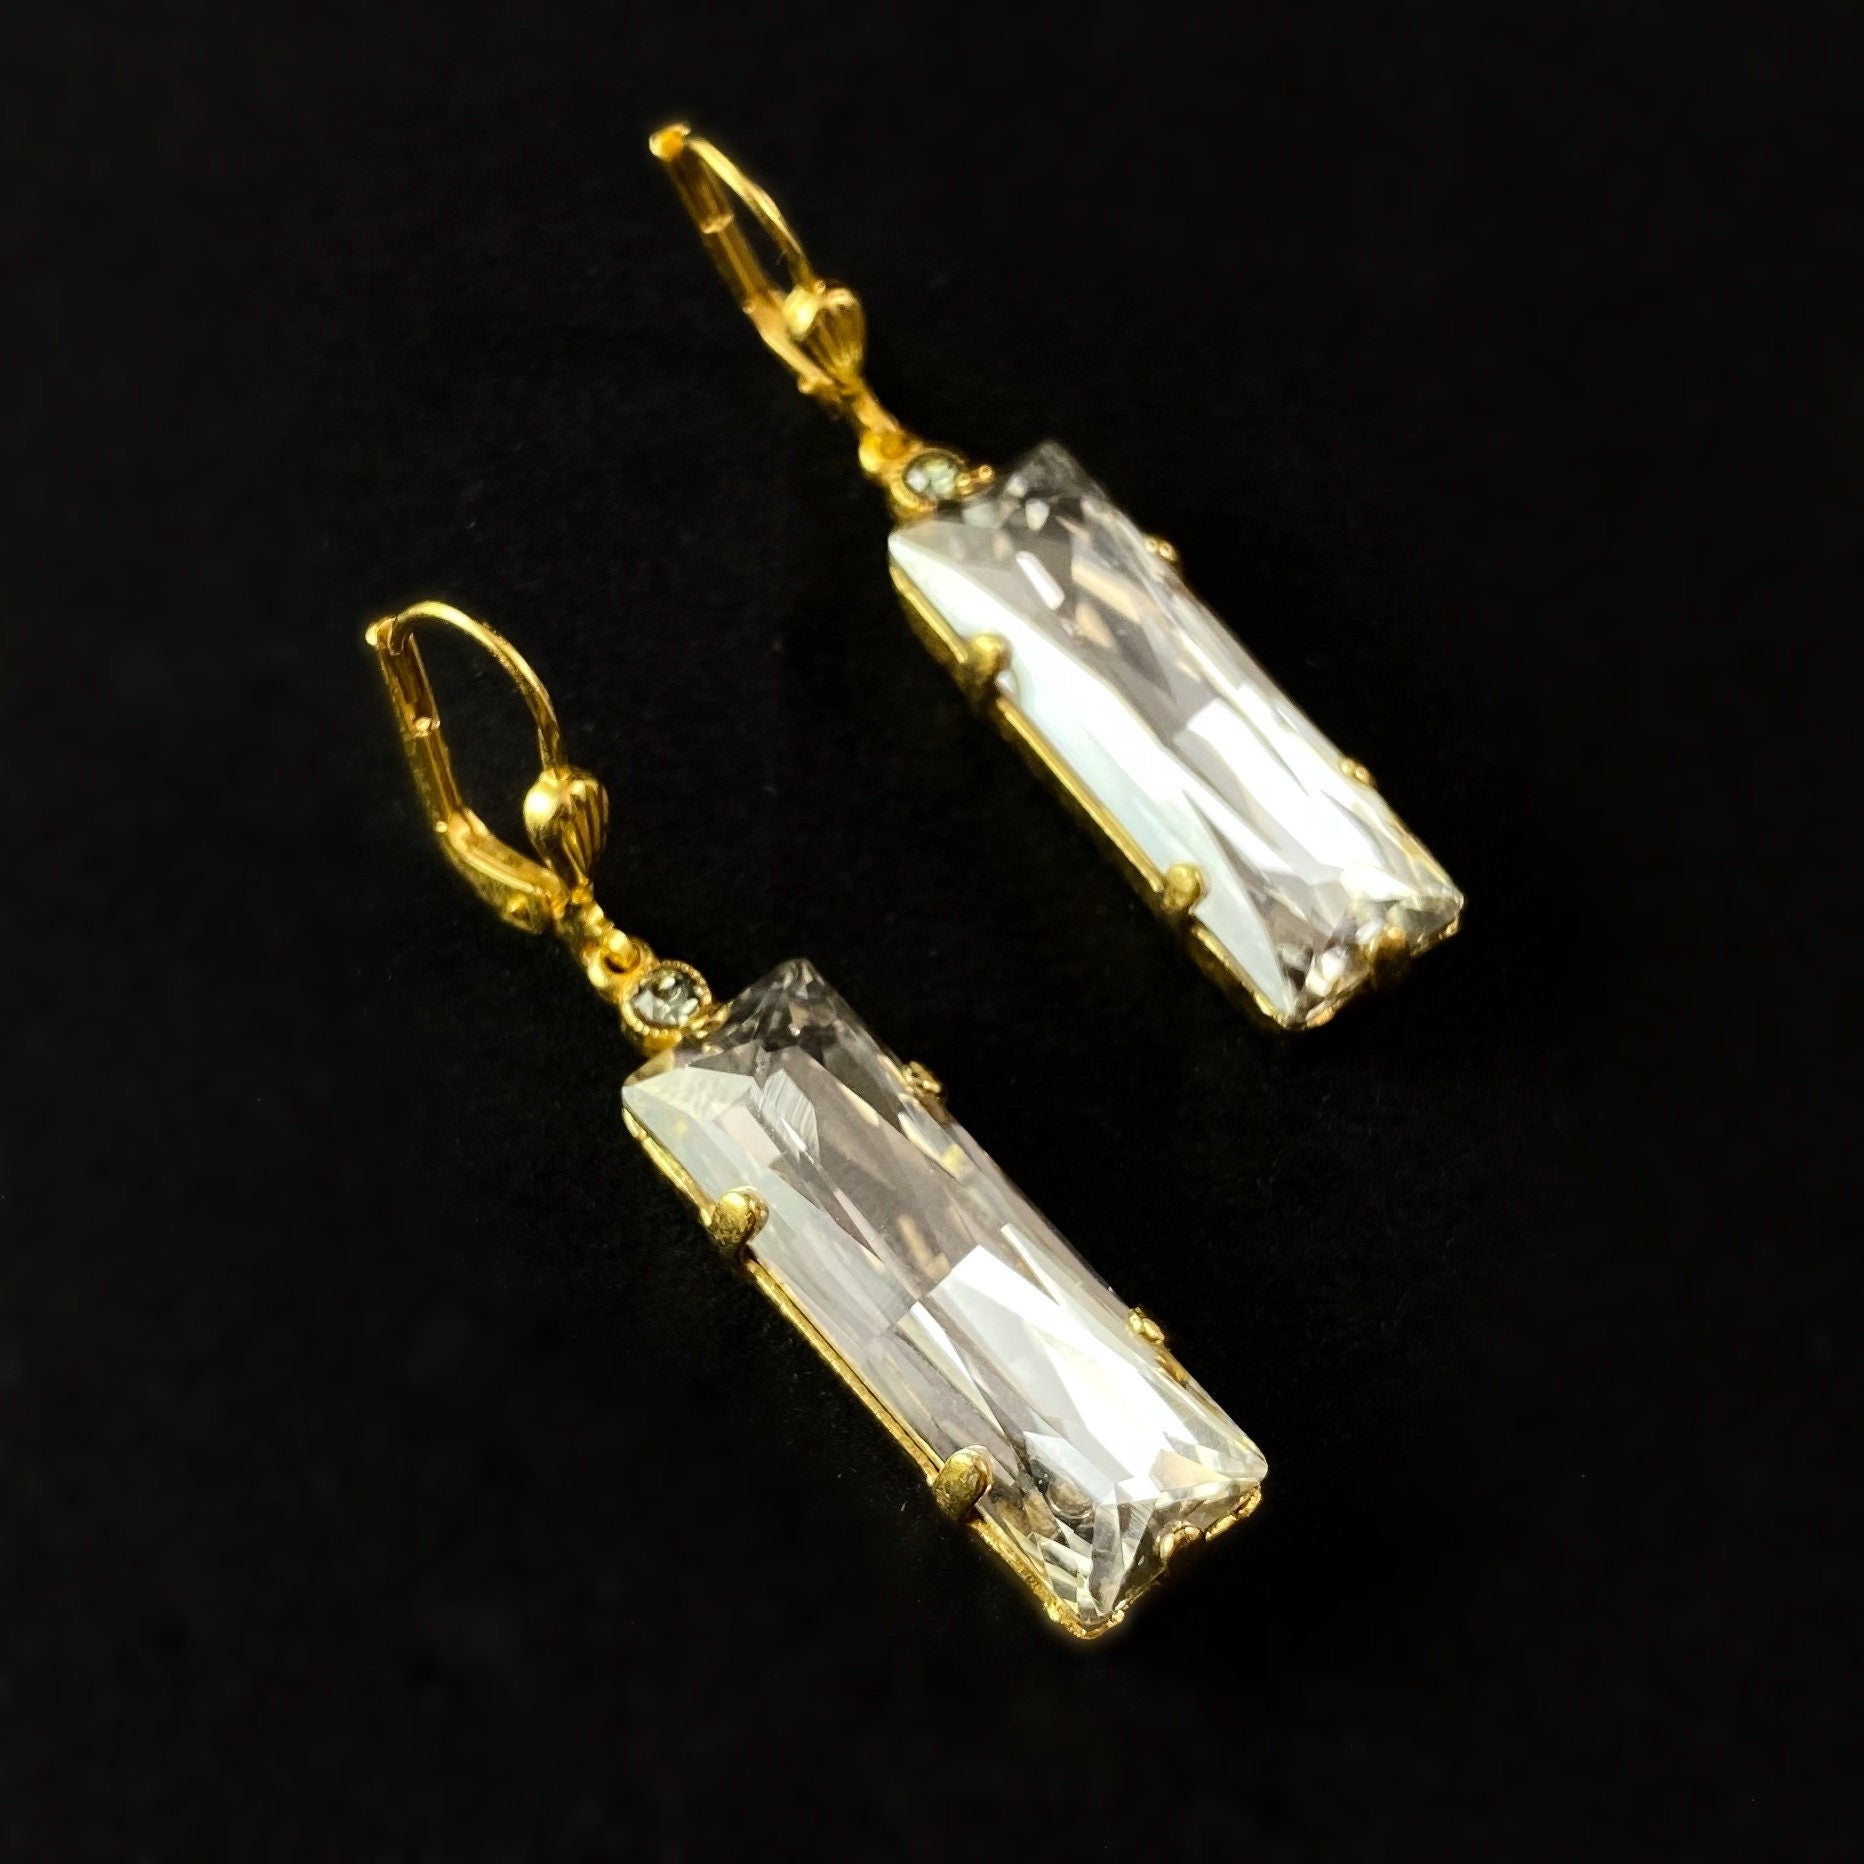 5 Day Set of Earrings with Genuine Swarovski Crystals | Catch.com.au